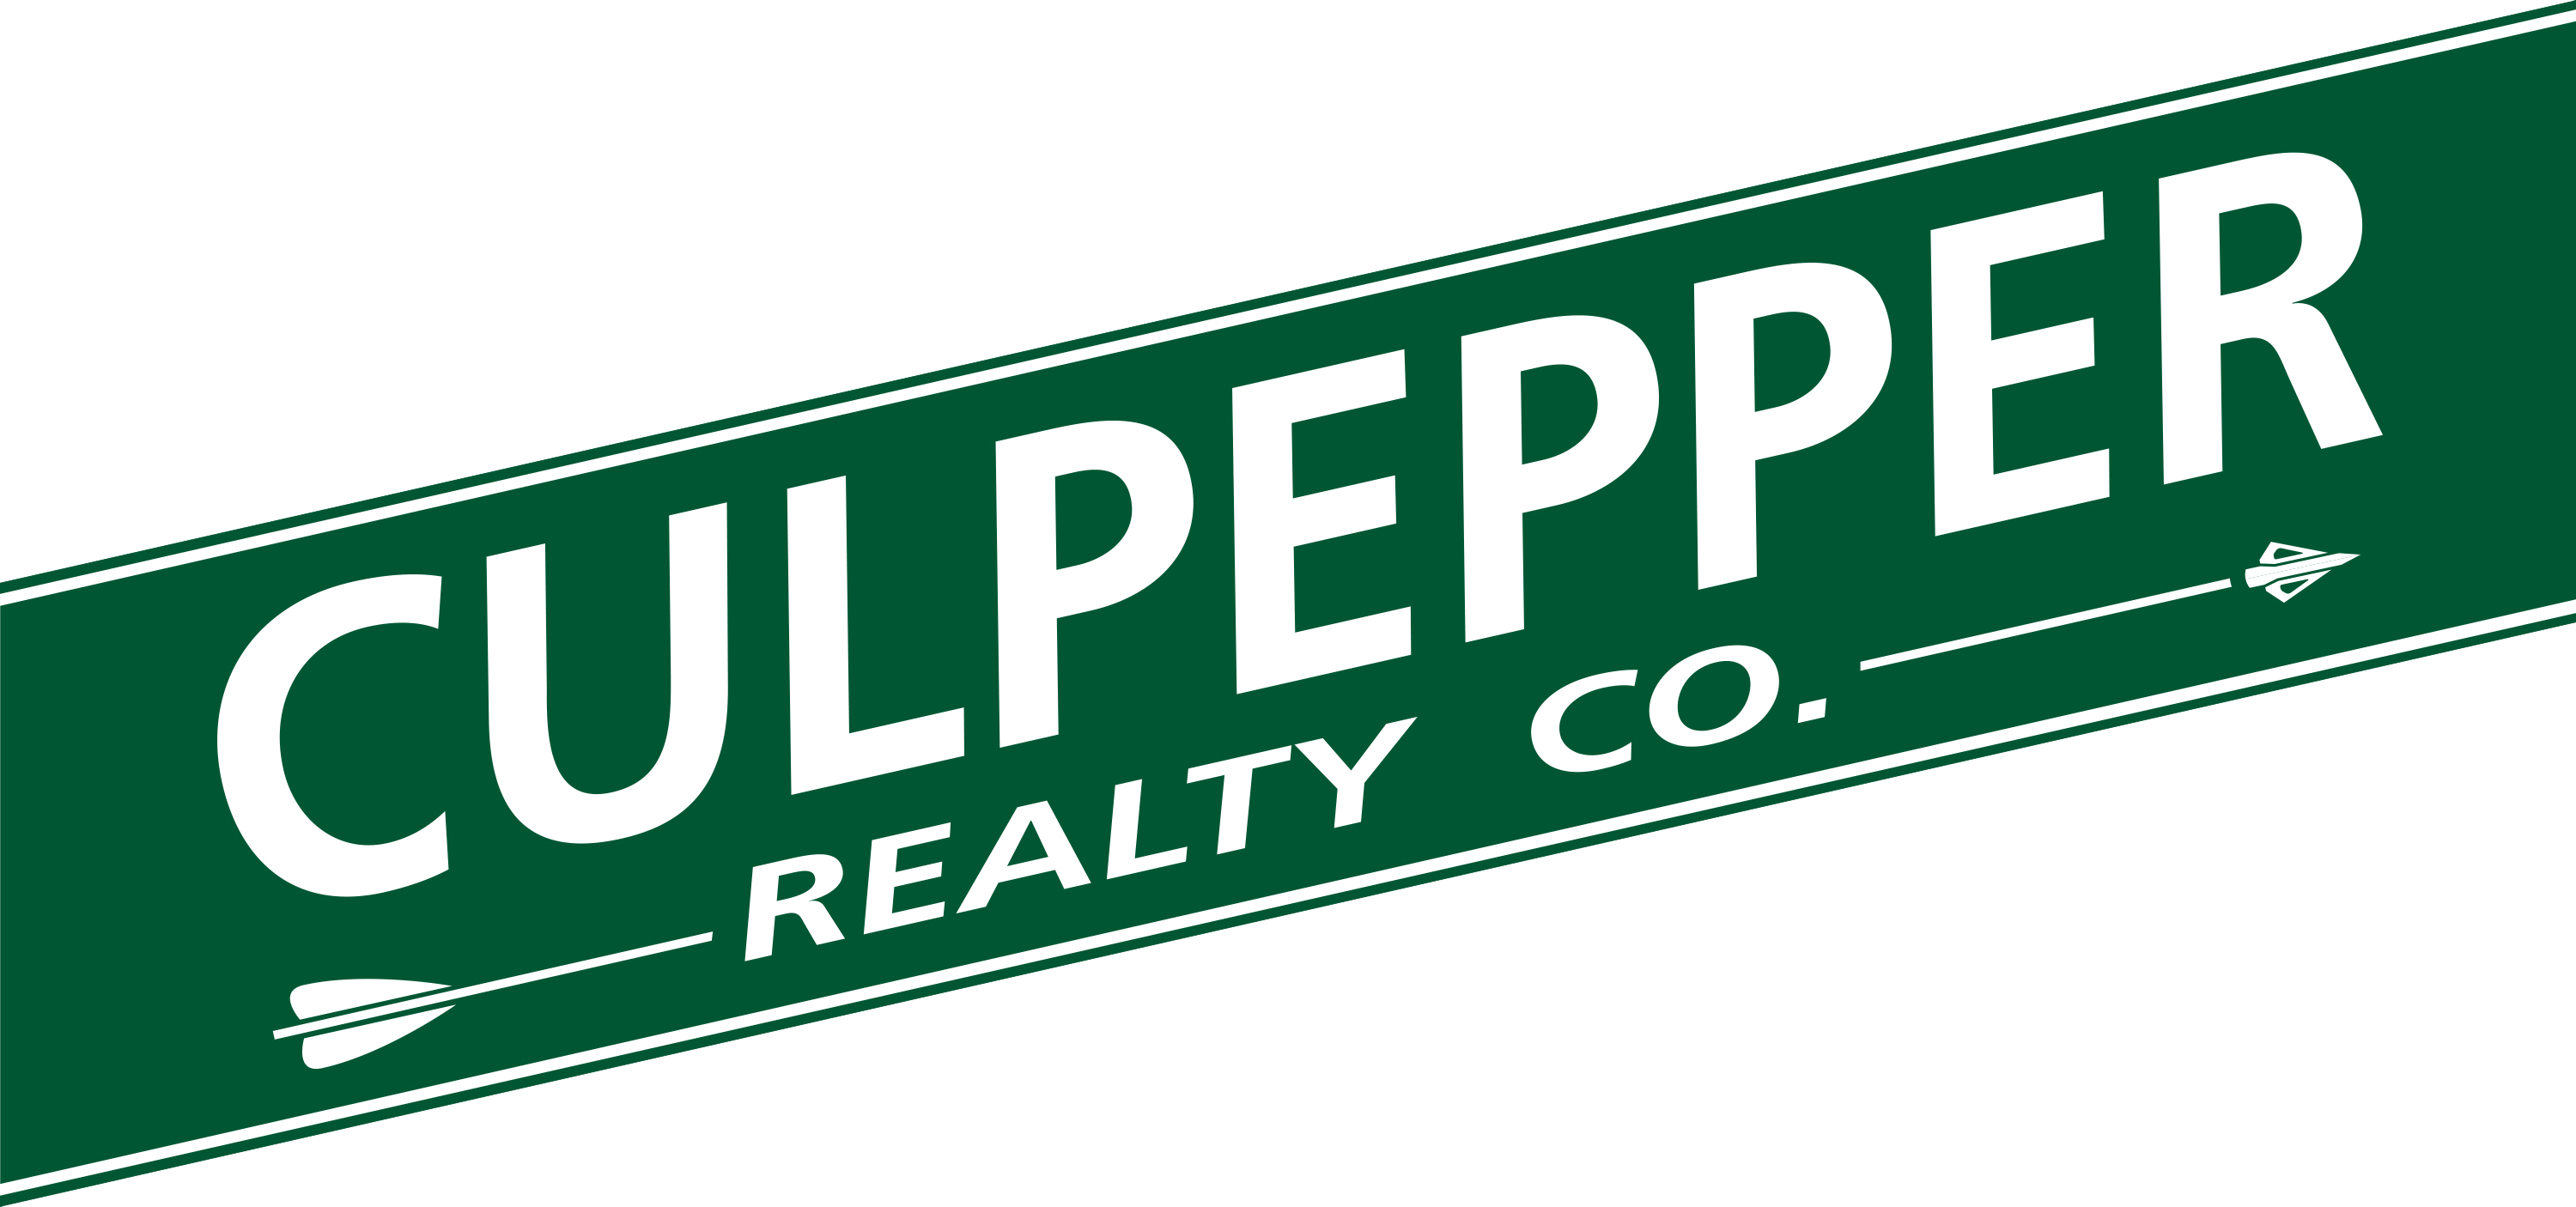 Culpepper Realty